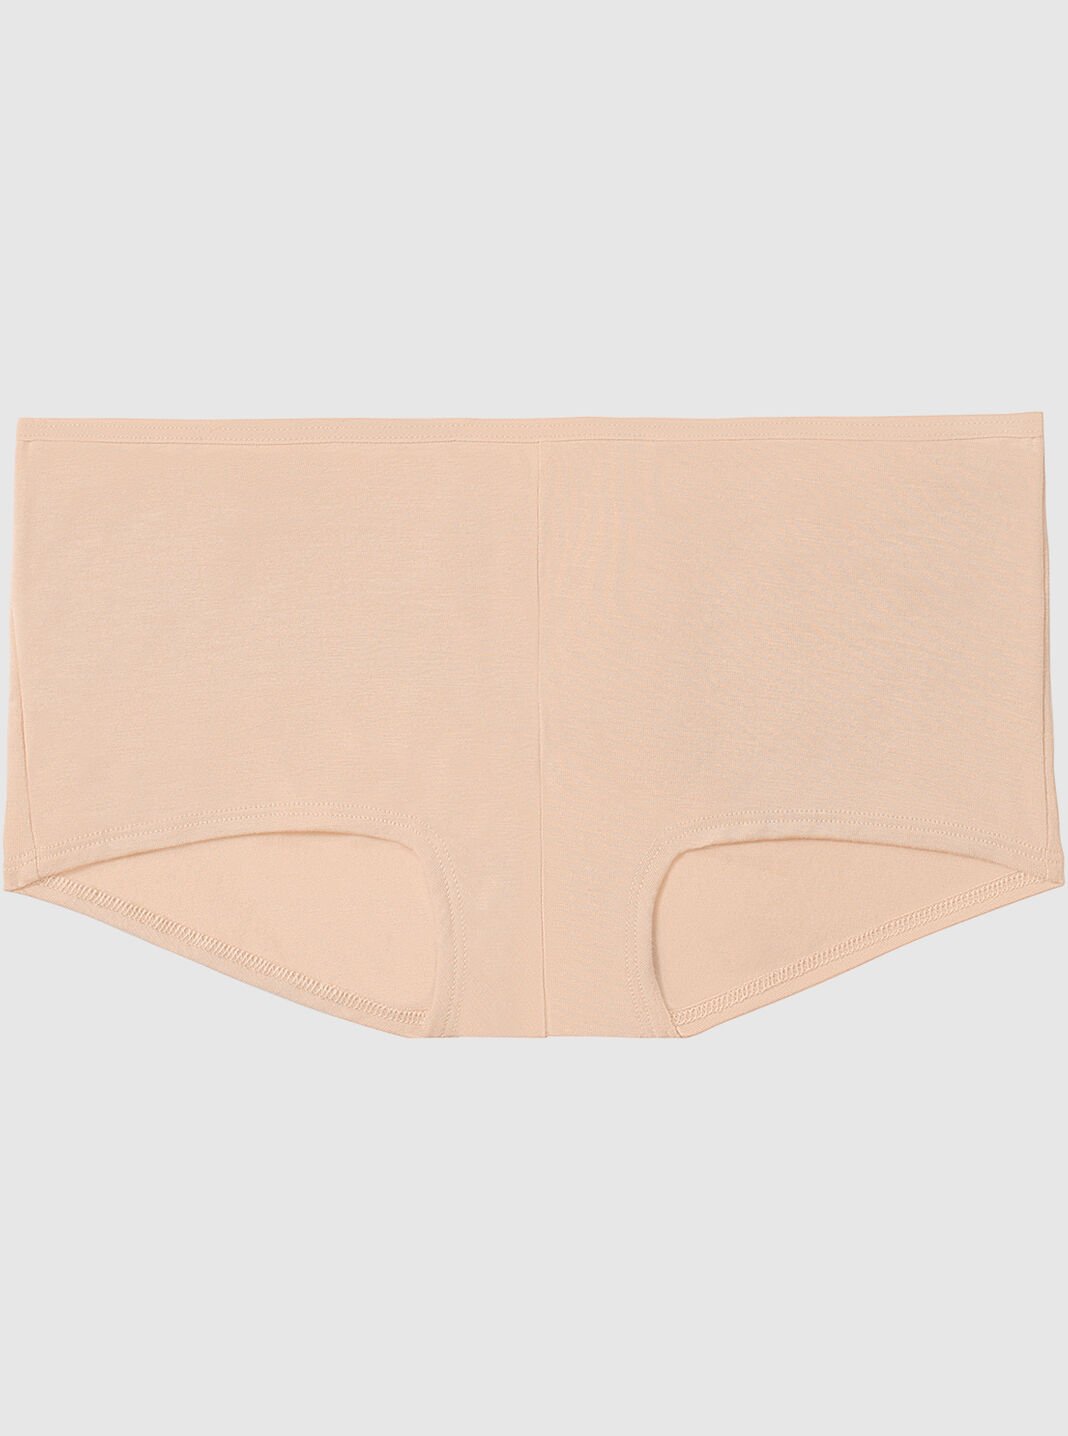 Boyshort Panties & Underwear for Women